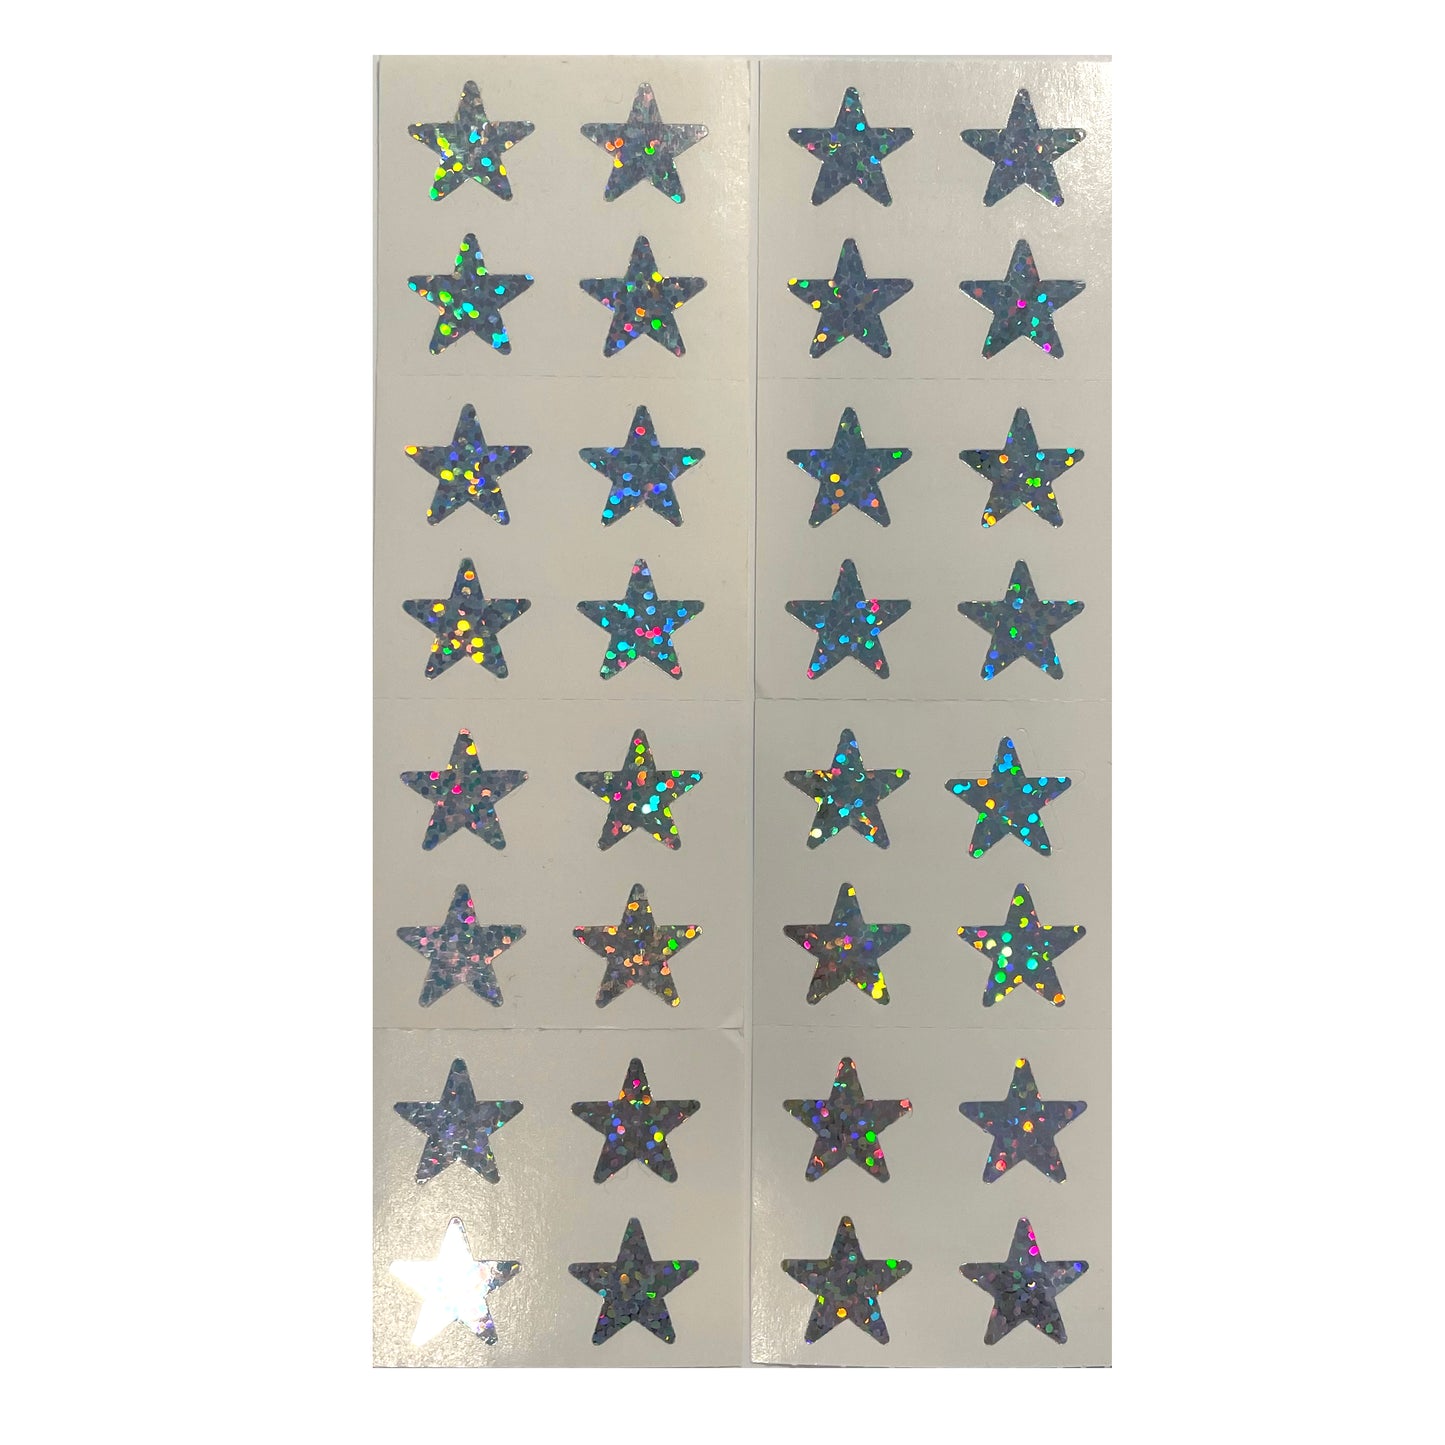 HAMBLY: Silver Star glitter stickers